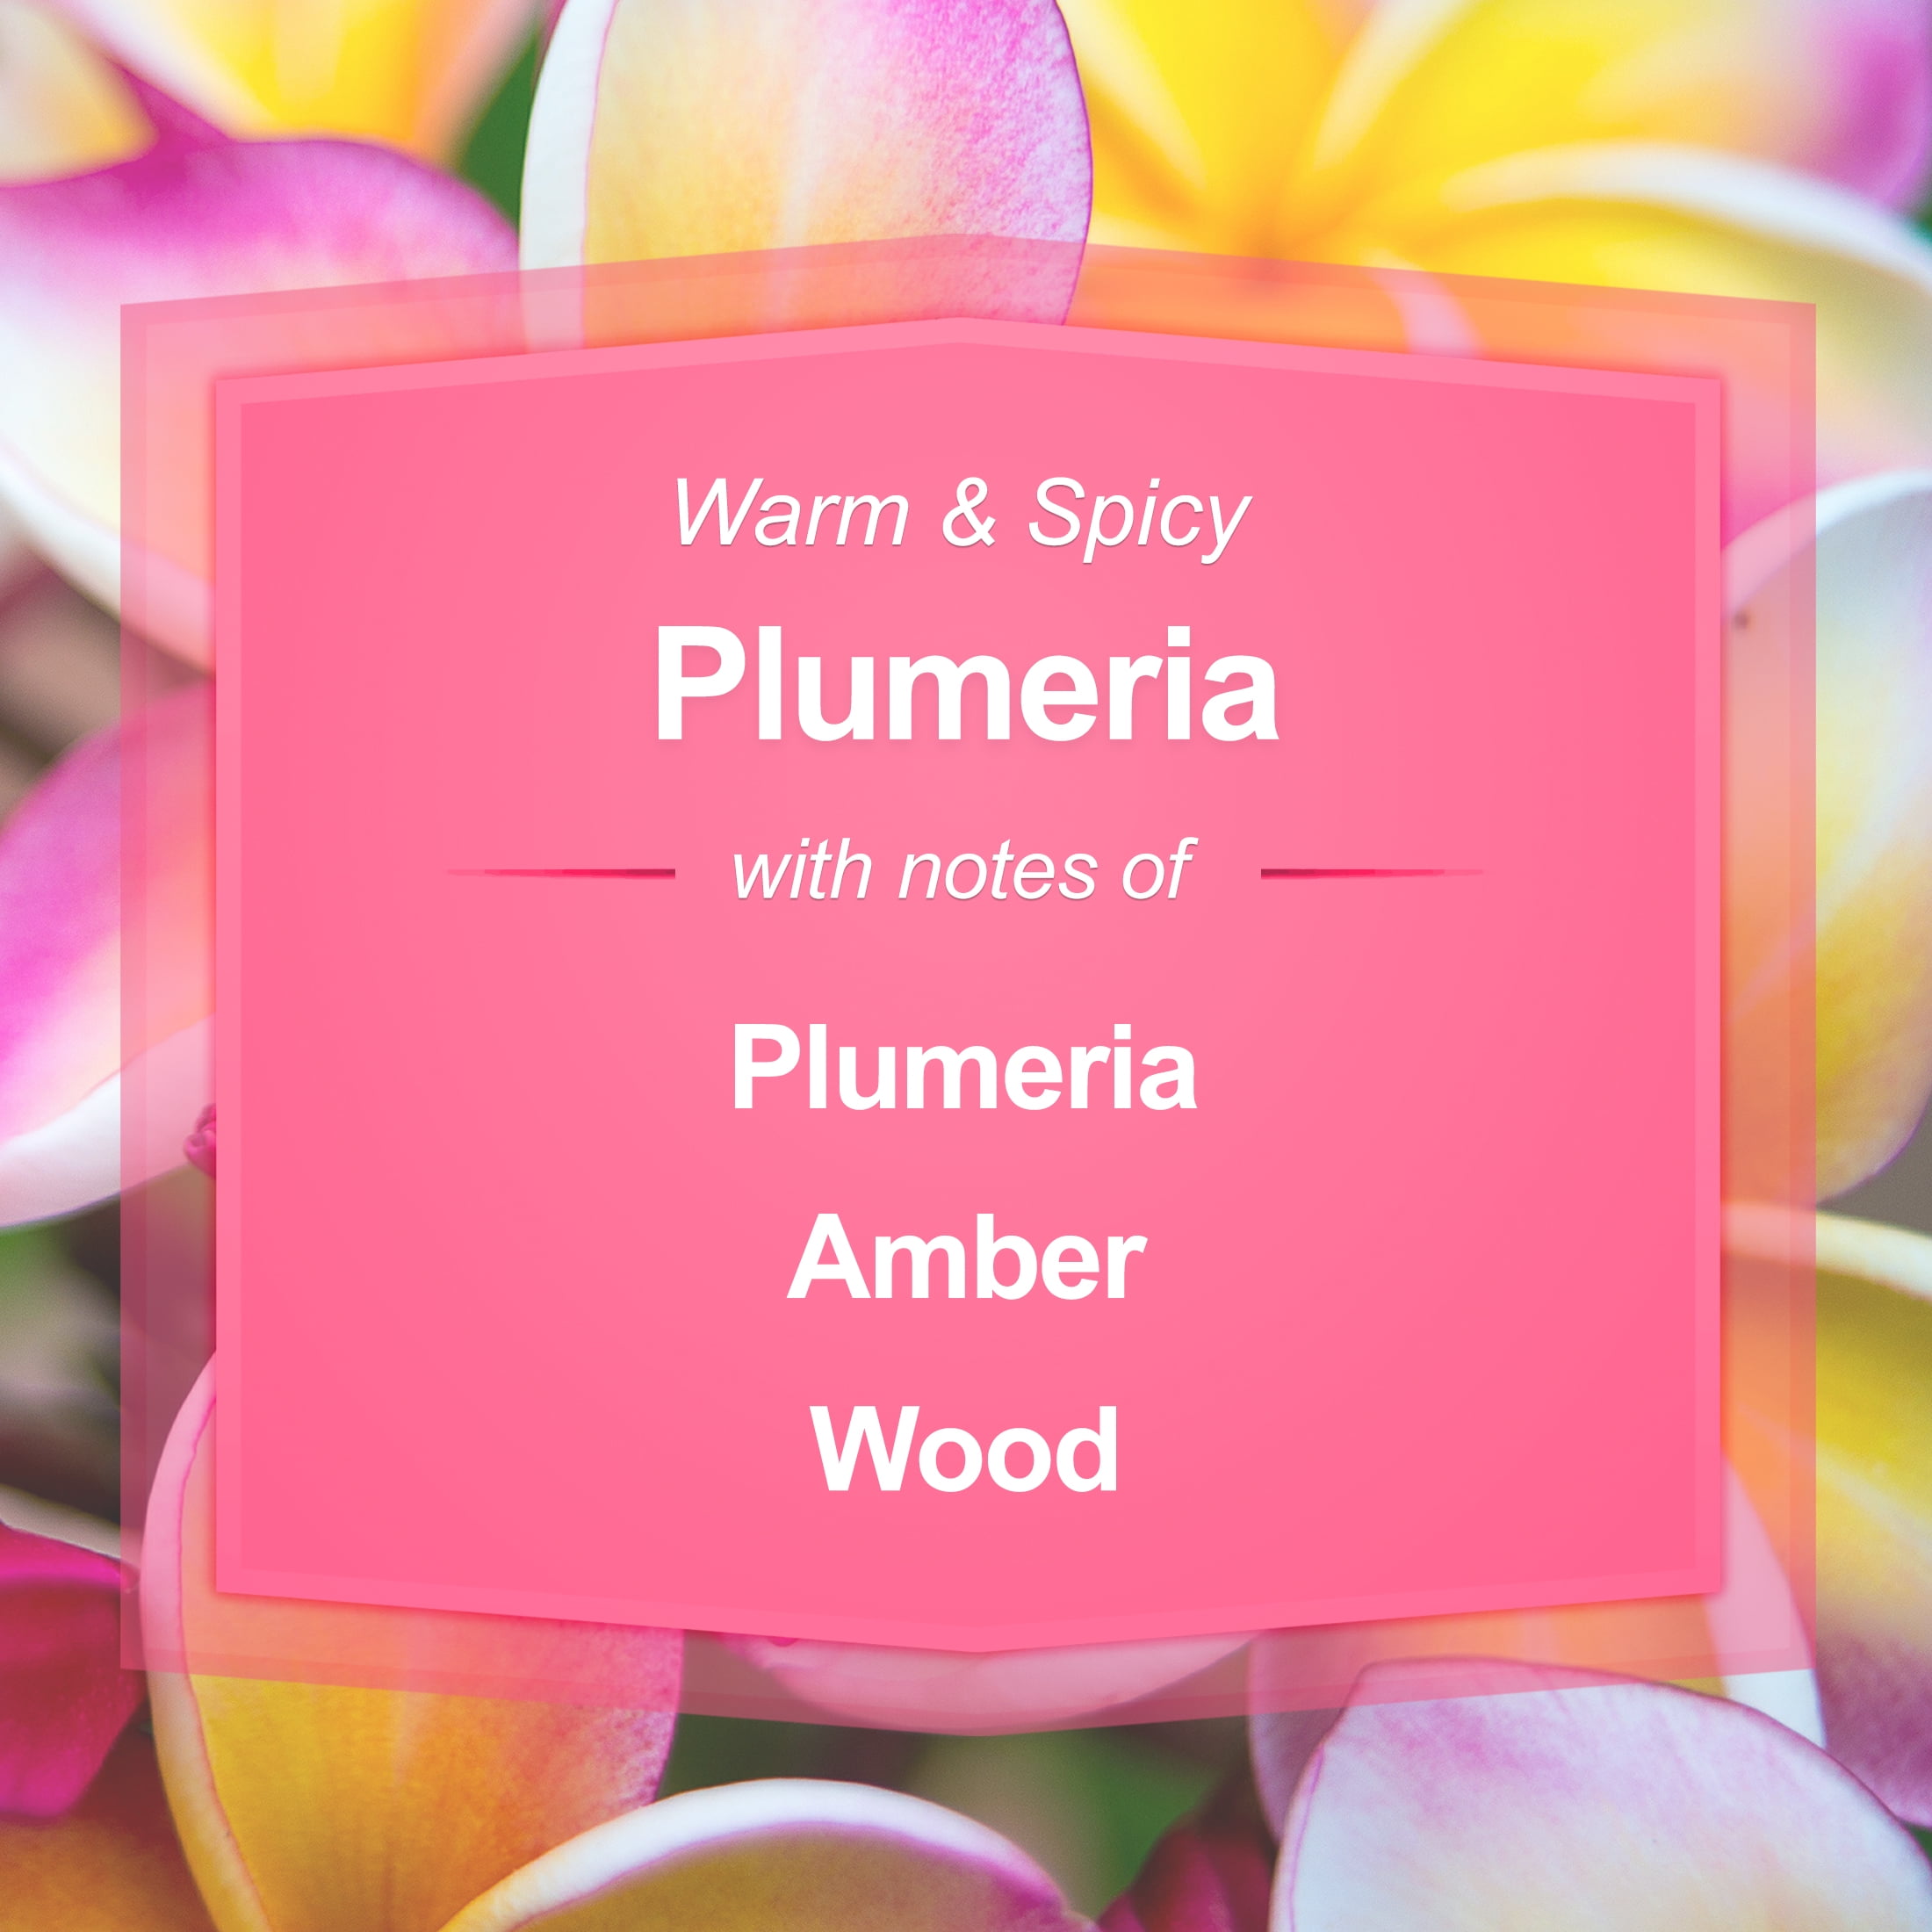 Plumeria Fragrance Oil  AAA Candle Supplies – Waxy Flower